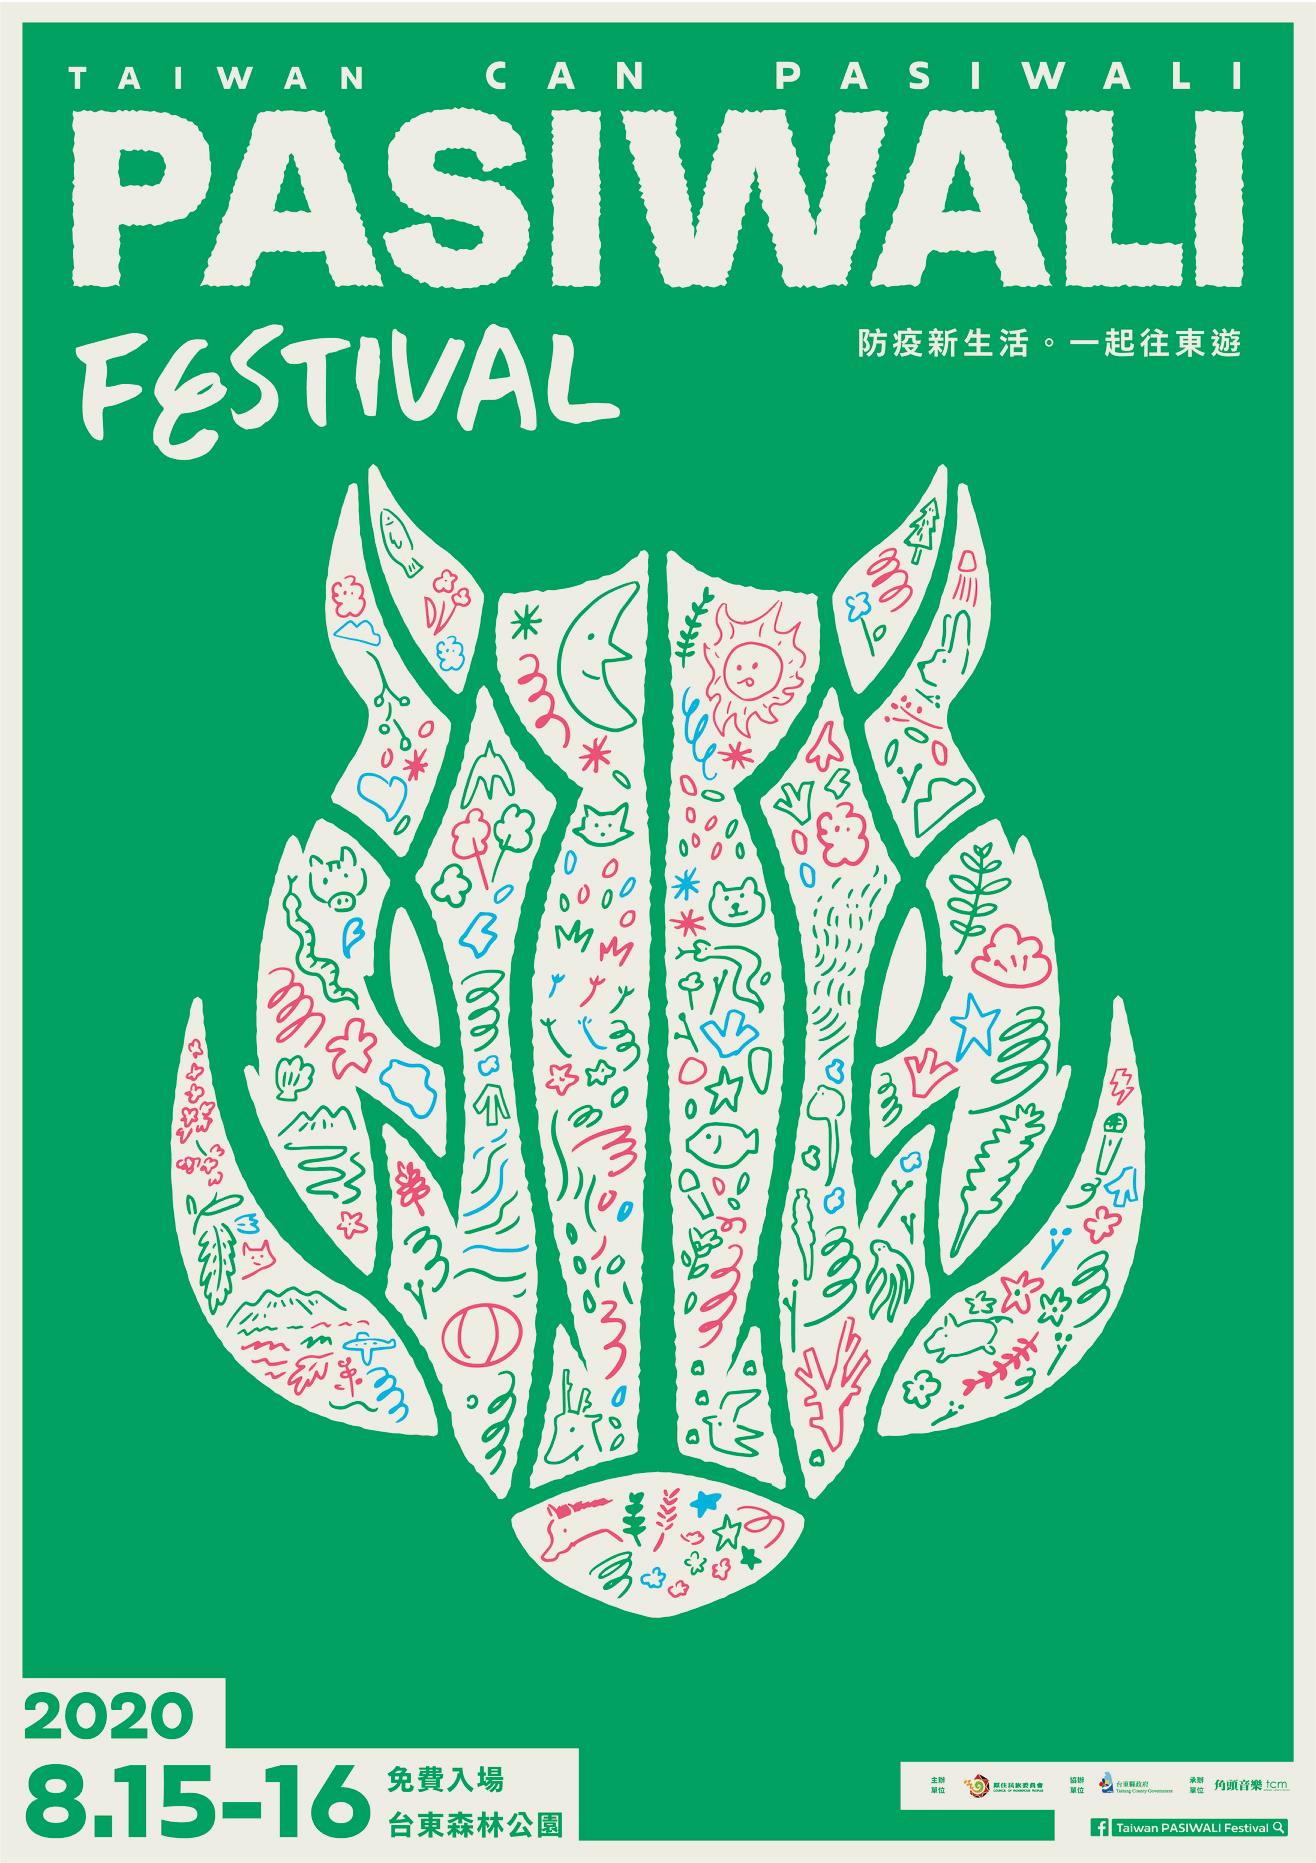 Taiwan PASIWALI Festival